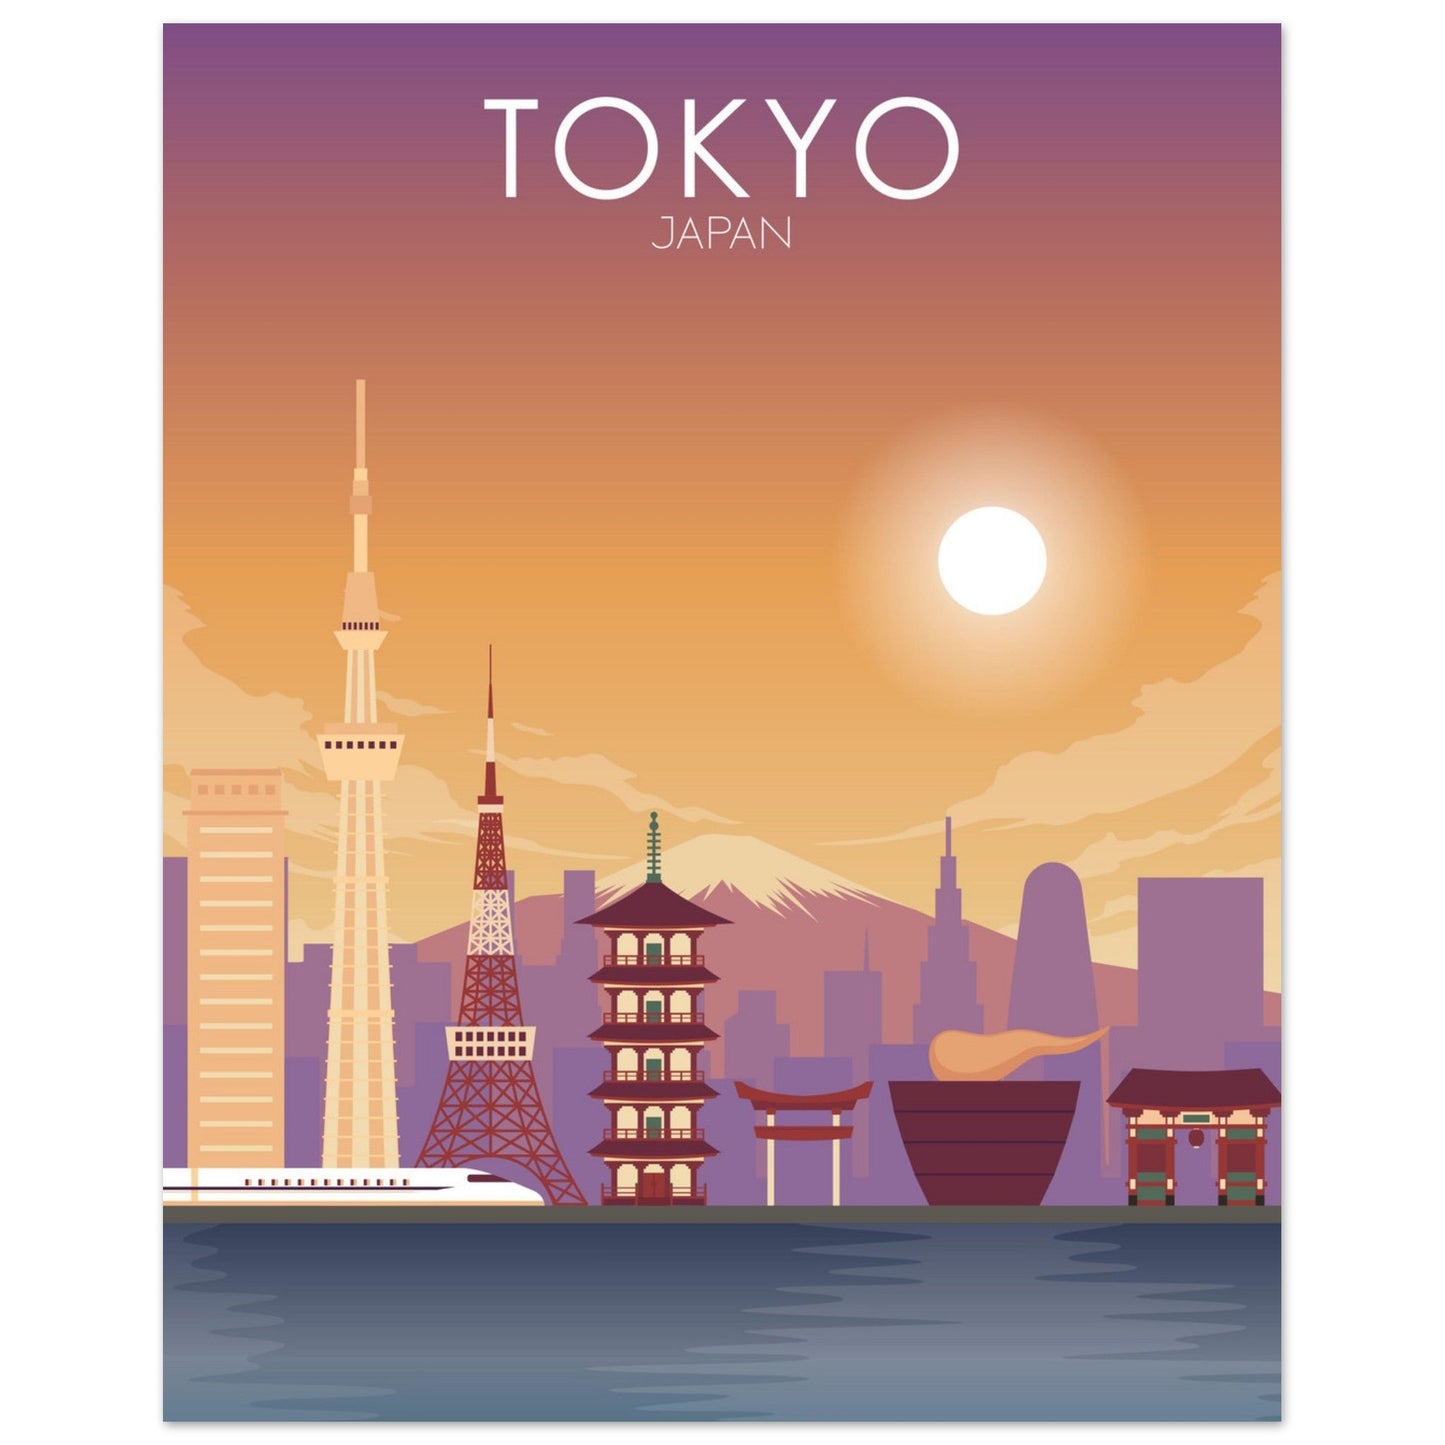 Tokyo Poster | Tokyo Wall Art | Tokyo Sunset Print